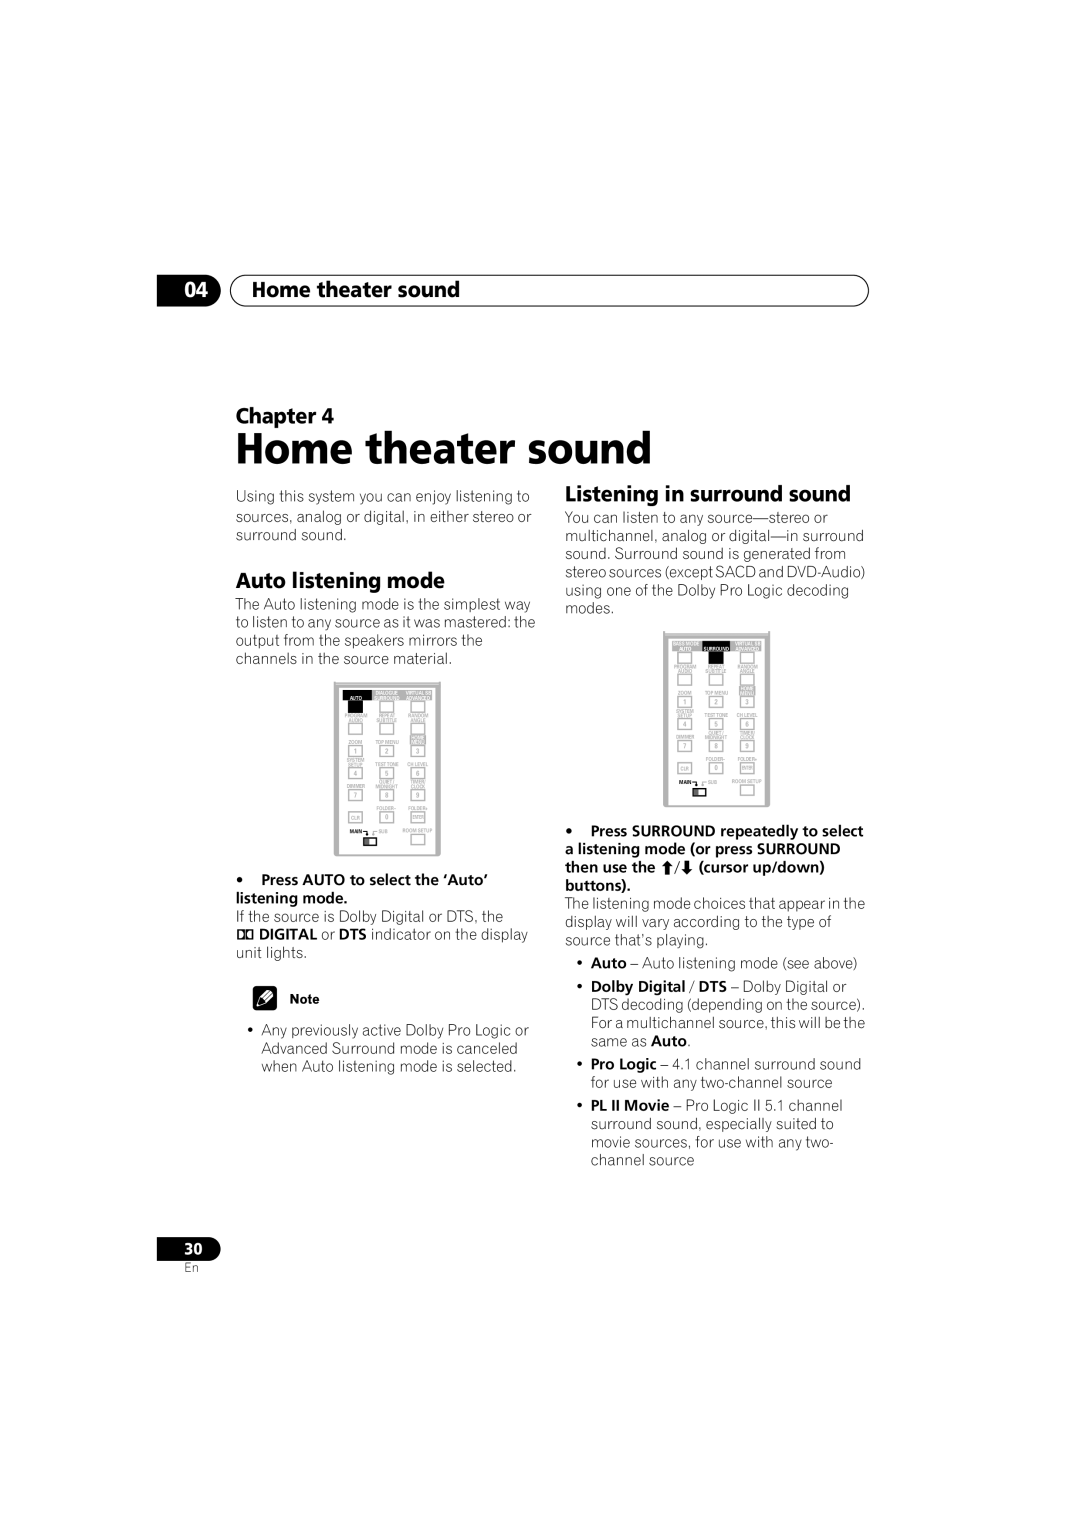 Pioneer XV-DV900, XV-DV700, S-DV900SW 04Home theater sound Chapter, Auto listening mode, Listening in surround sound 